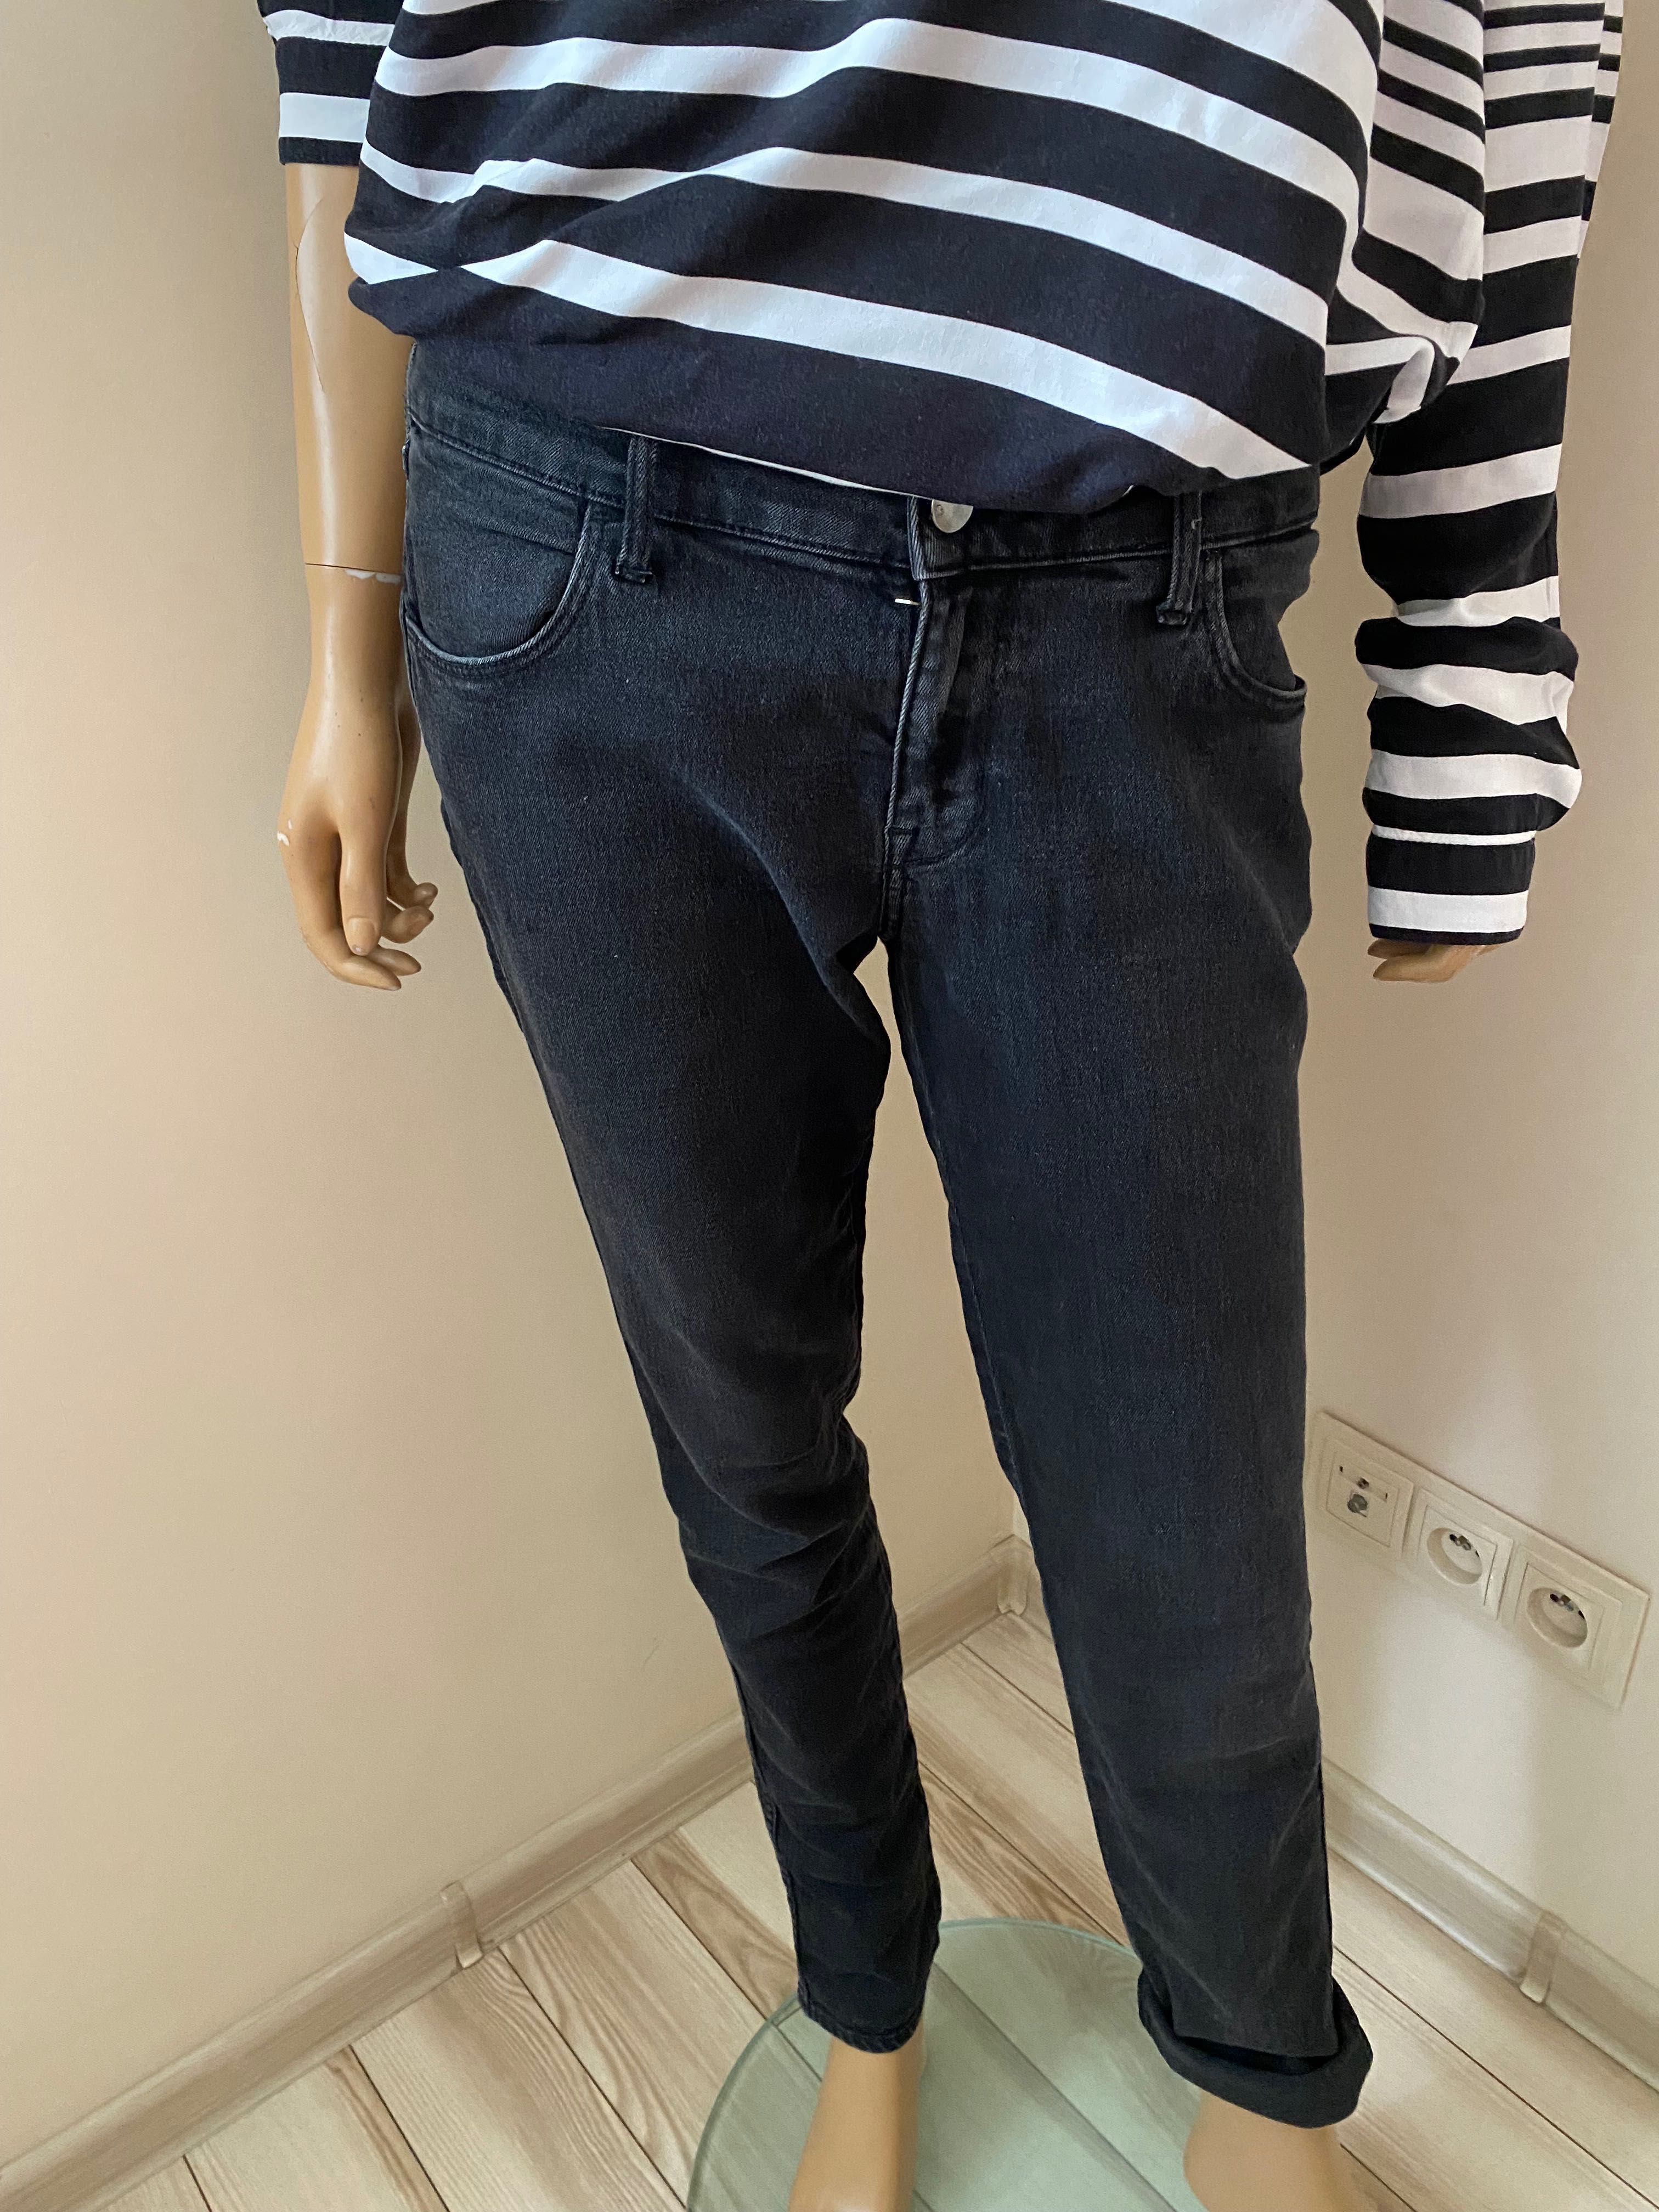 H&M jeansy skinny wygodne z elastanem miękki jeans 40/L